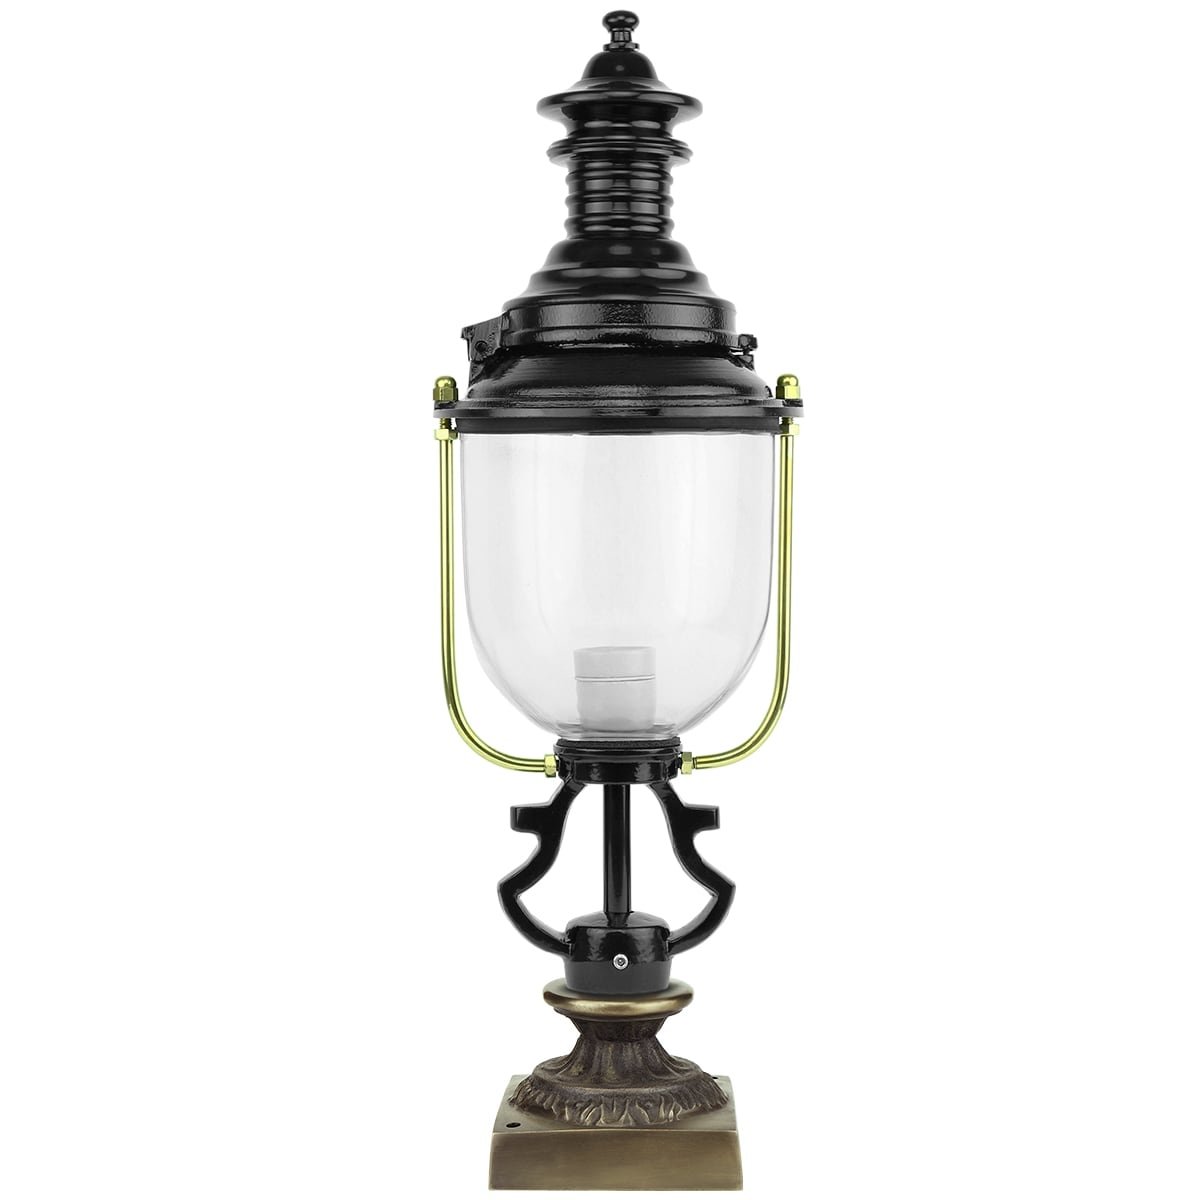 Outdoor lamp pedestal Saasveld - 65 cm